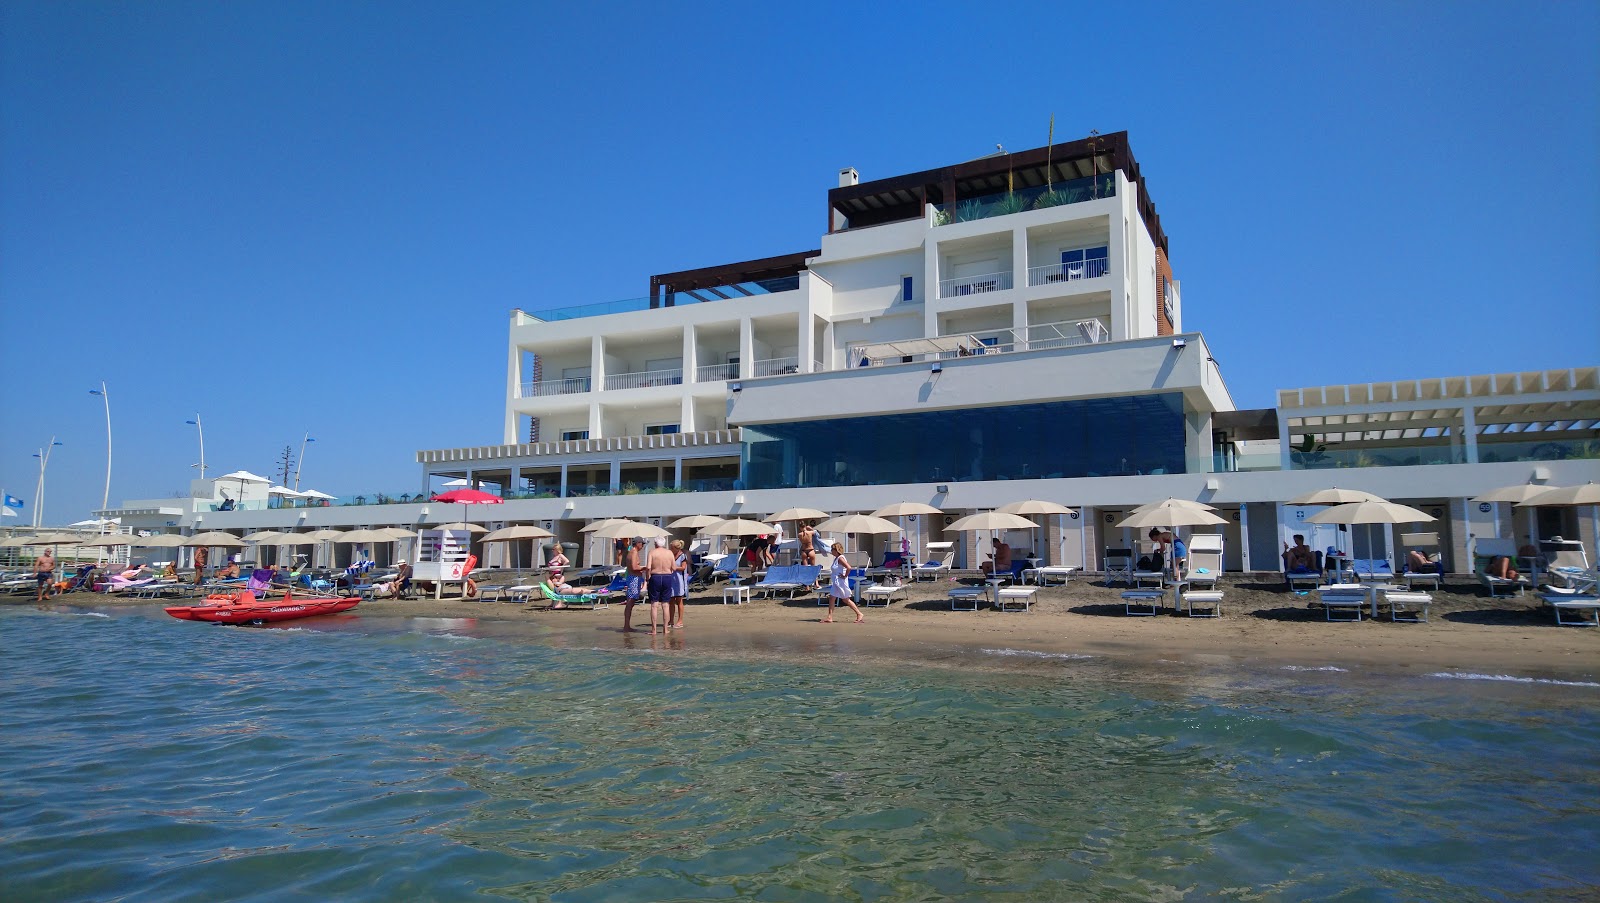 Foto av Capoportiere beach delvis hotellområde